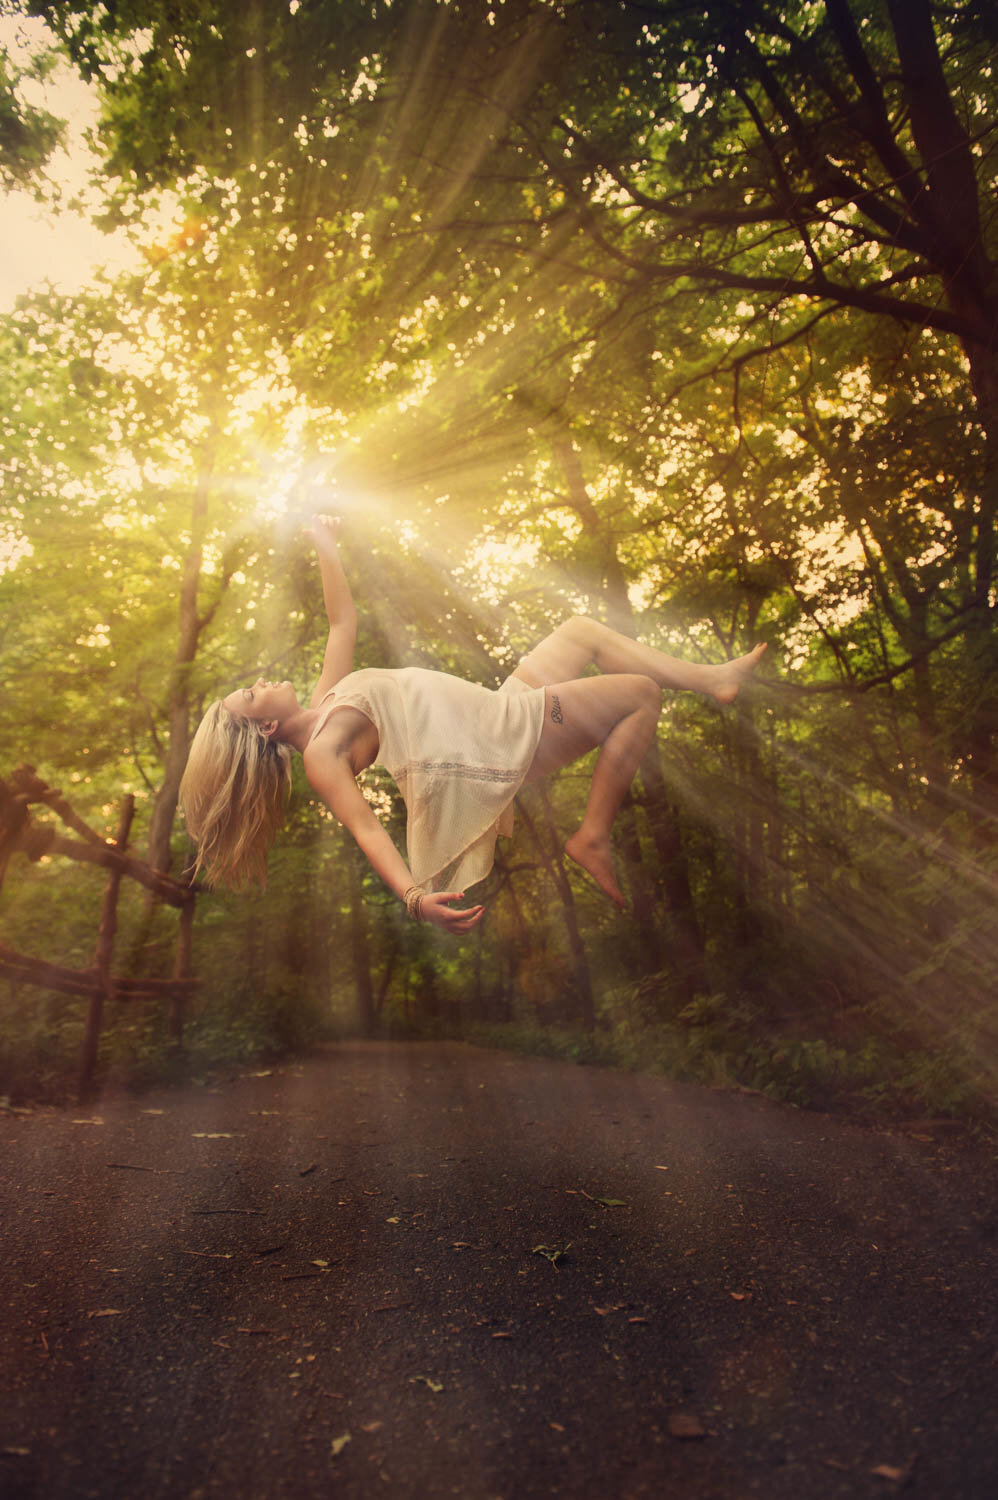 levitation image of girl in sunlight in trees